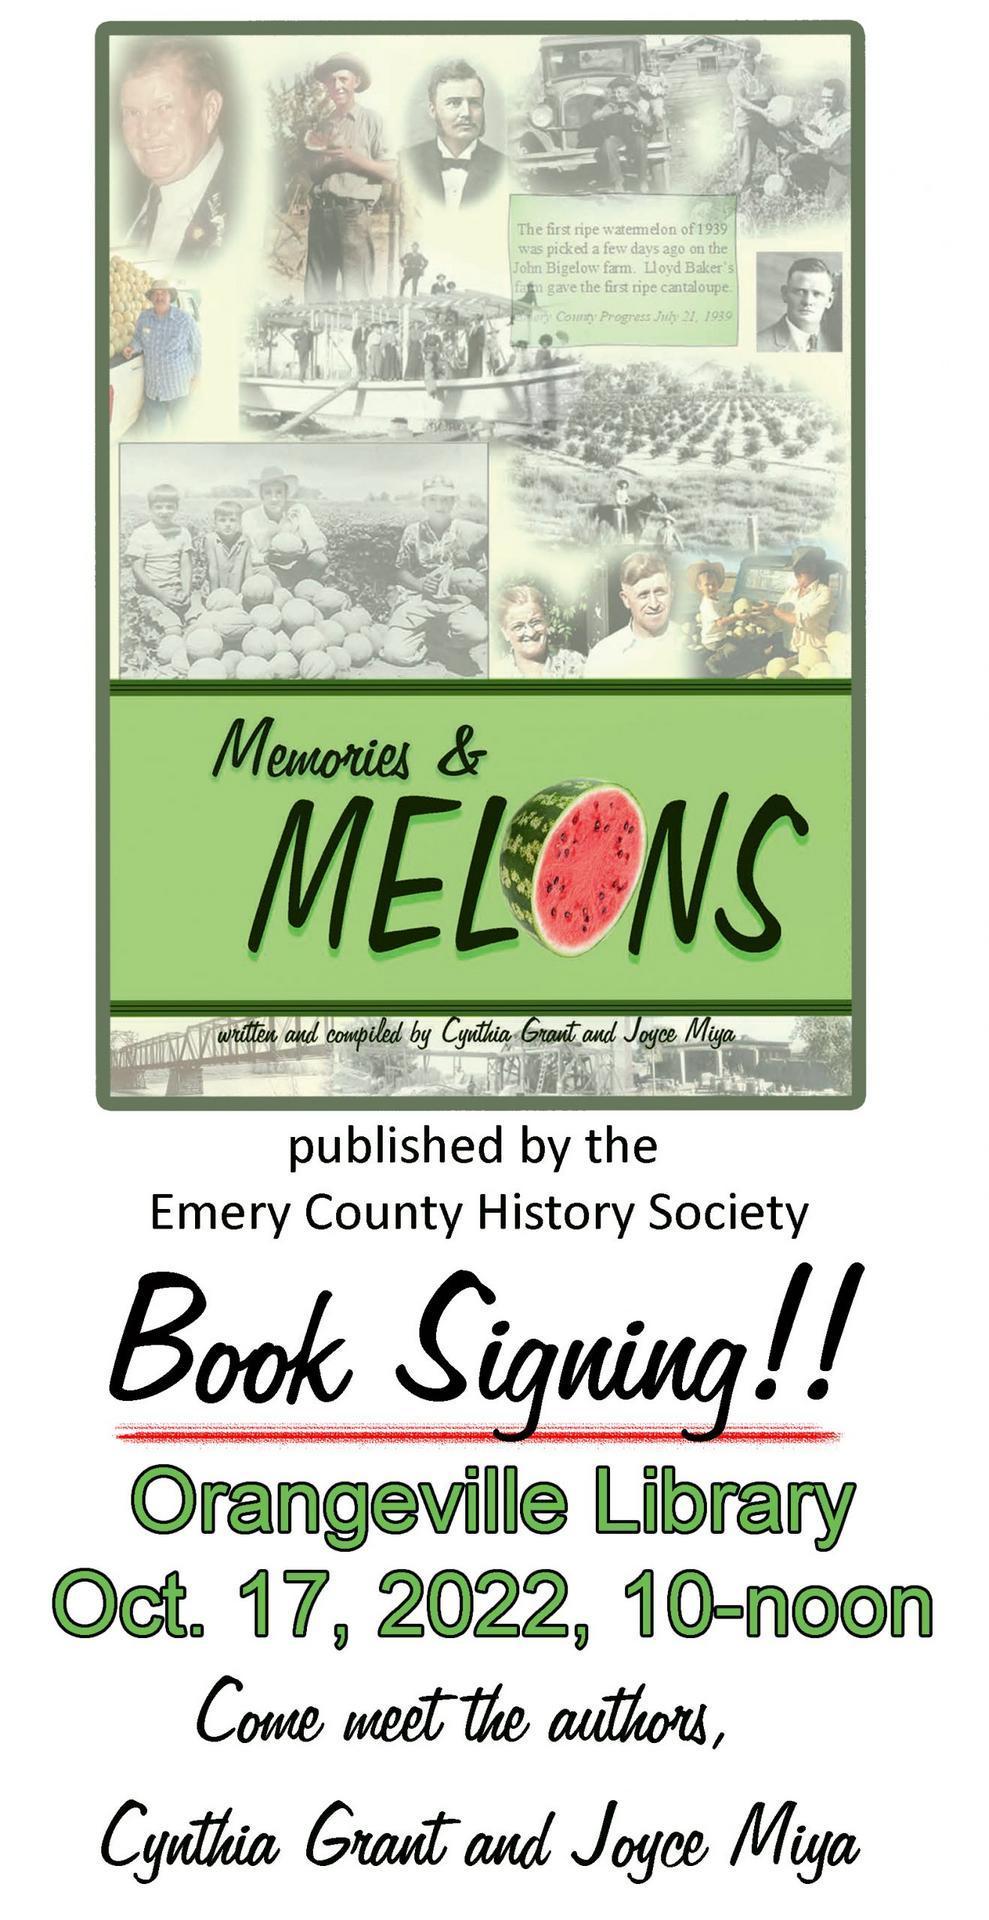 melon-days-book-signing-etvnews-scaled.jpg